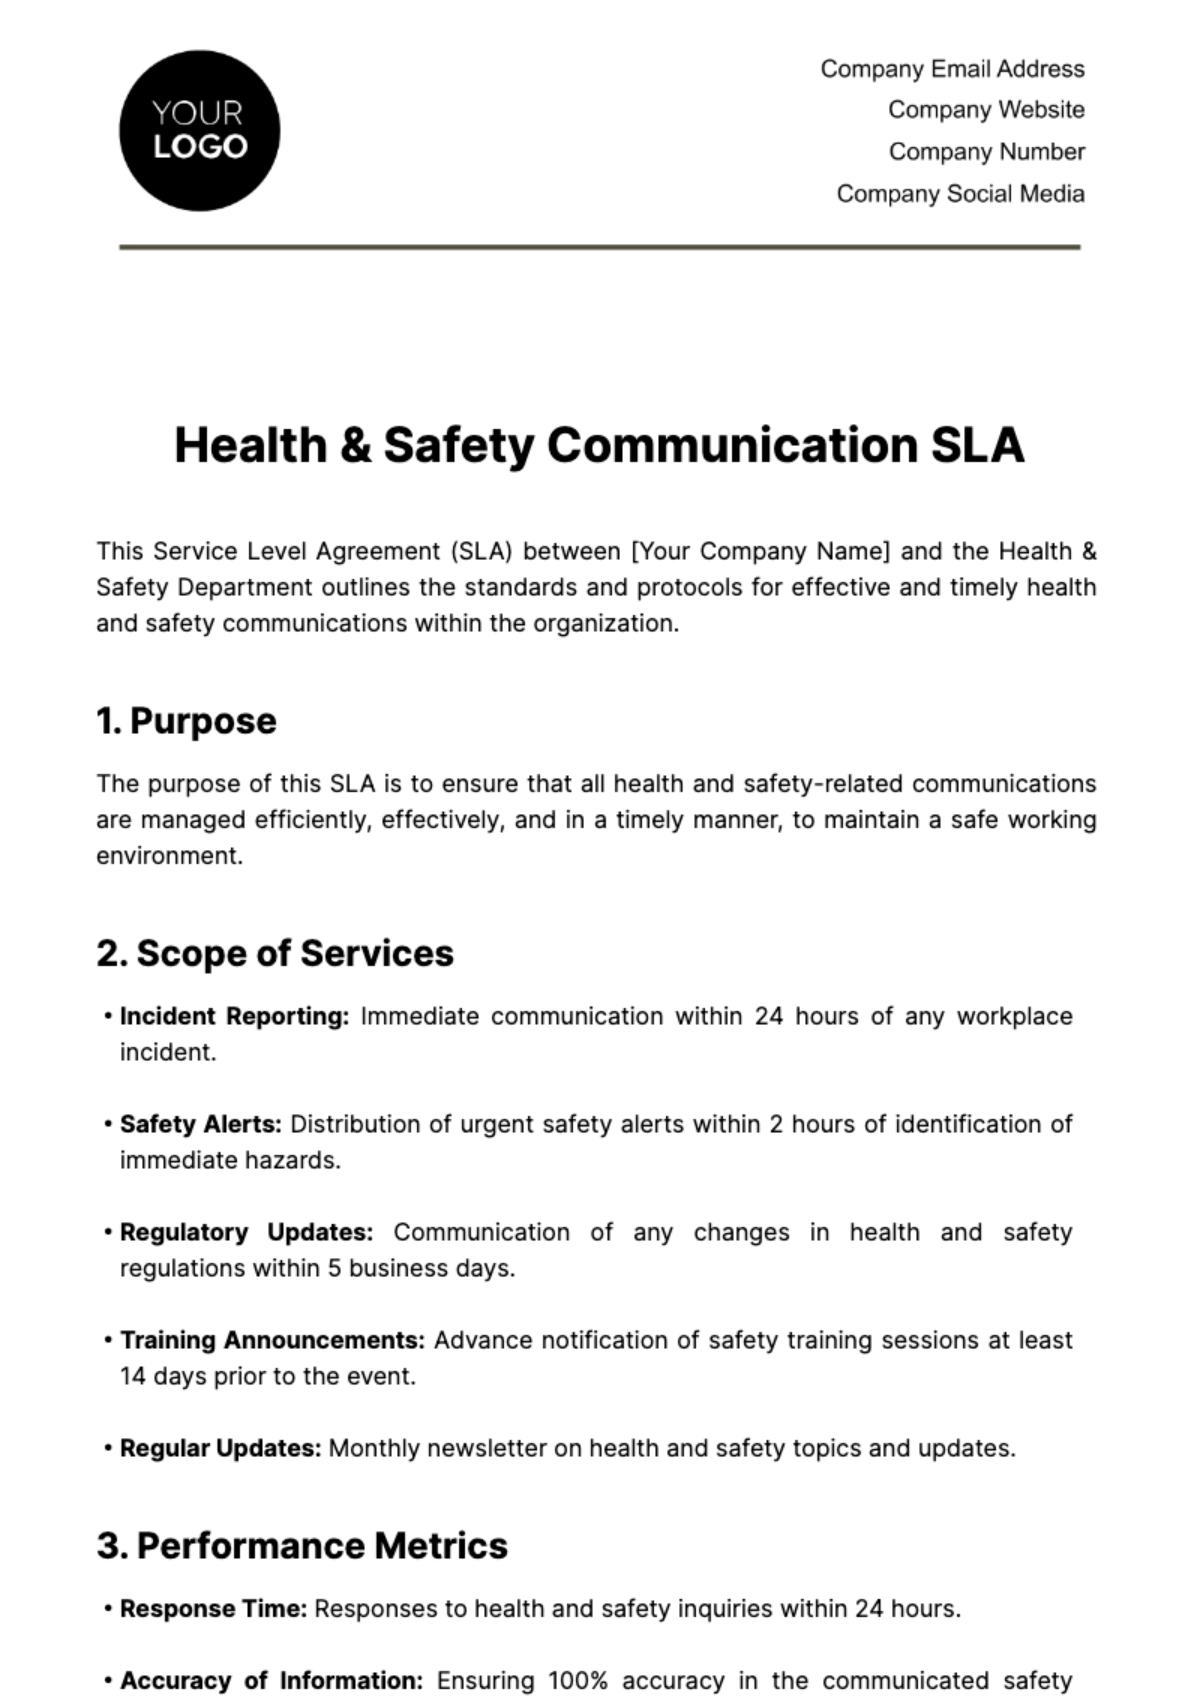 Health & Safety Communication SLA Template